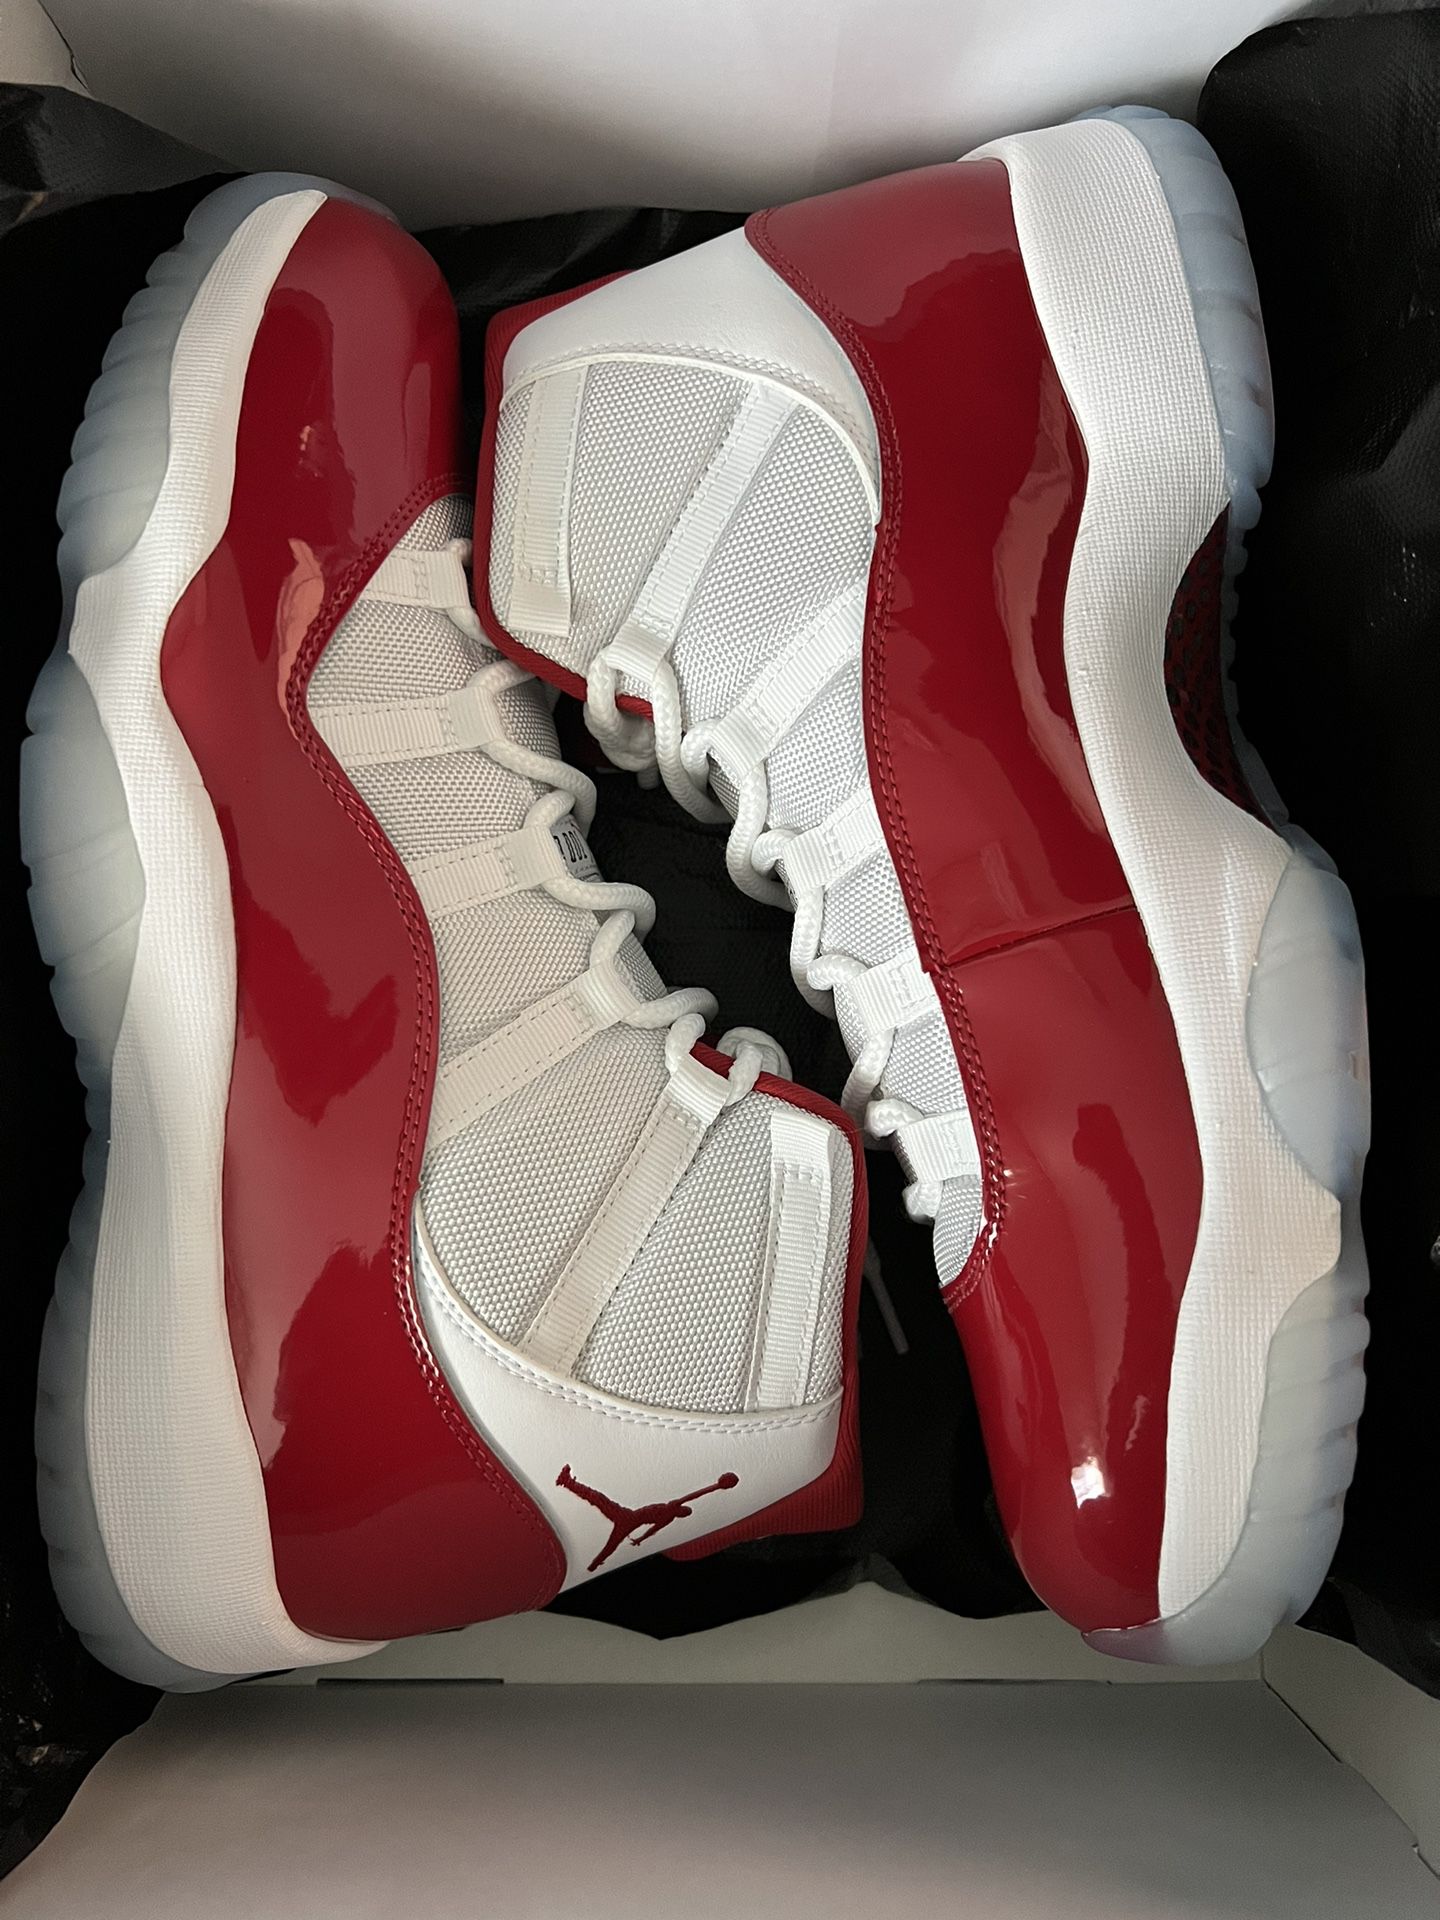 Nike Air Jordan Retro 11 Cherry Size 12.5 Brand New